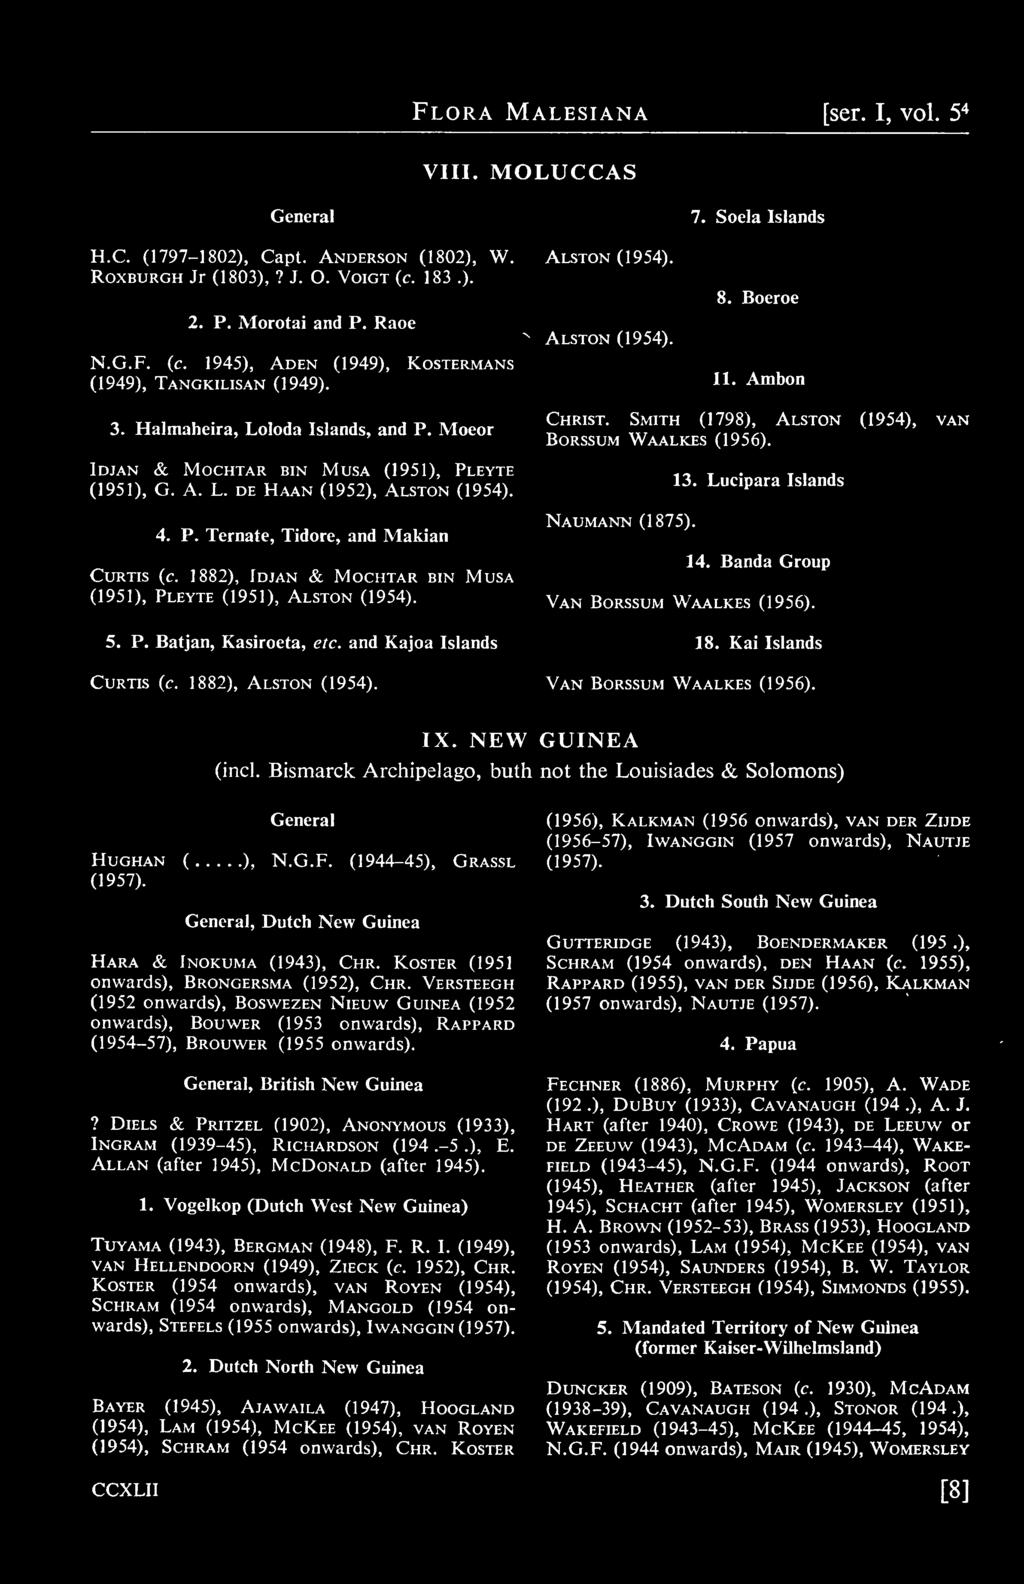 4. P. Ternate, Tidore, and Makian Curtis (c. 1882), Idjan & Mochtar bin Musa (1951), Pleyte (1951), Alston (1954). Christ. Smith (1798), Alston (1954), van Borssum Waalkes (1956). Naumann (1875). 13.